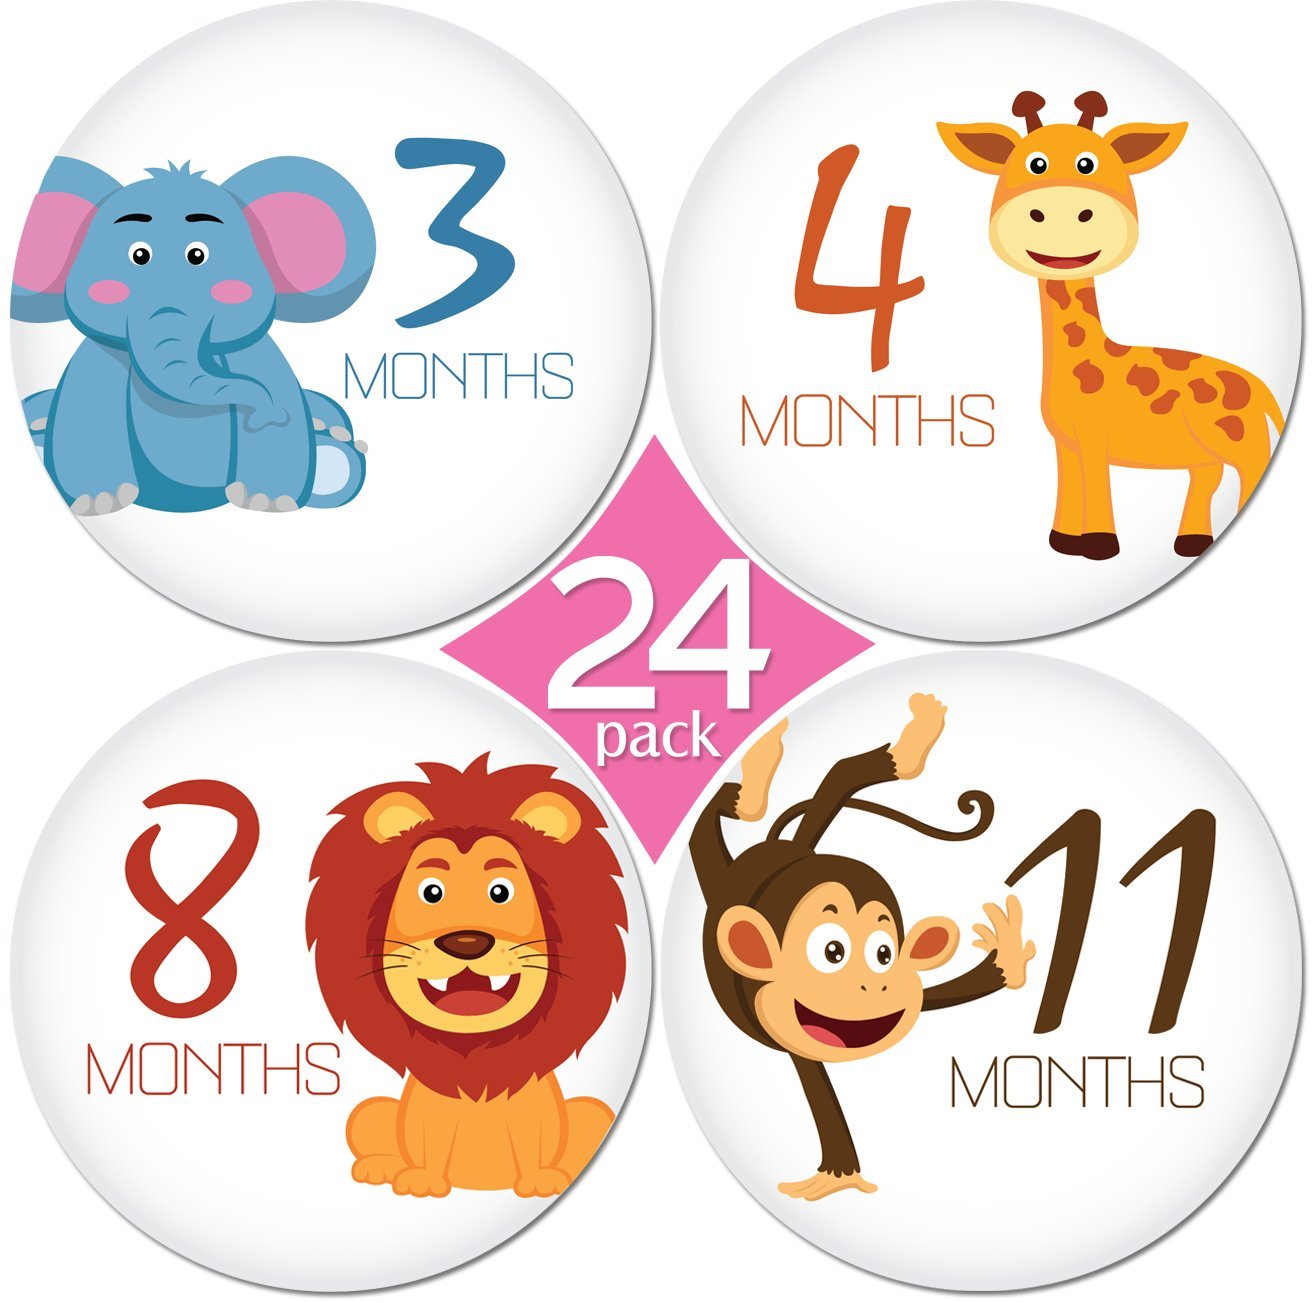 KiddosArt Monthly Baby Milestone Stickers